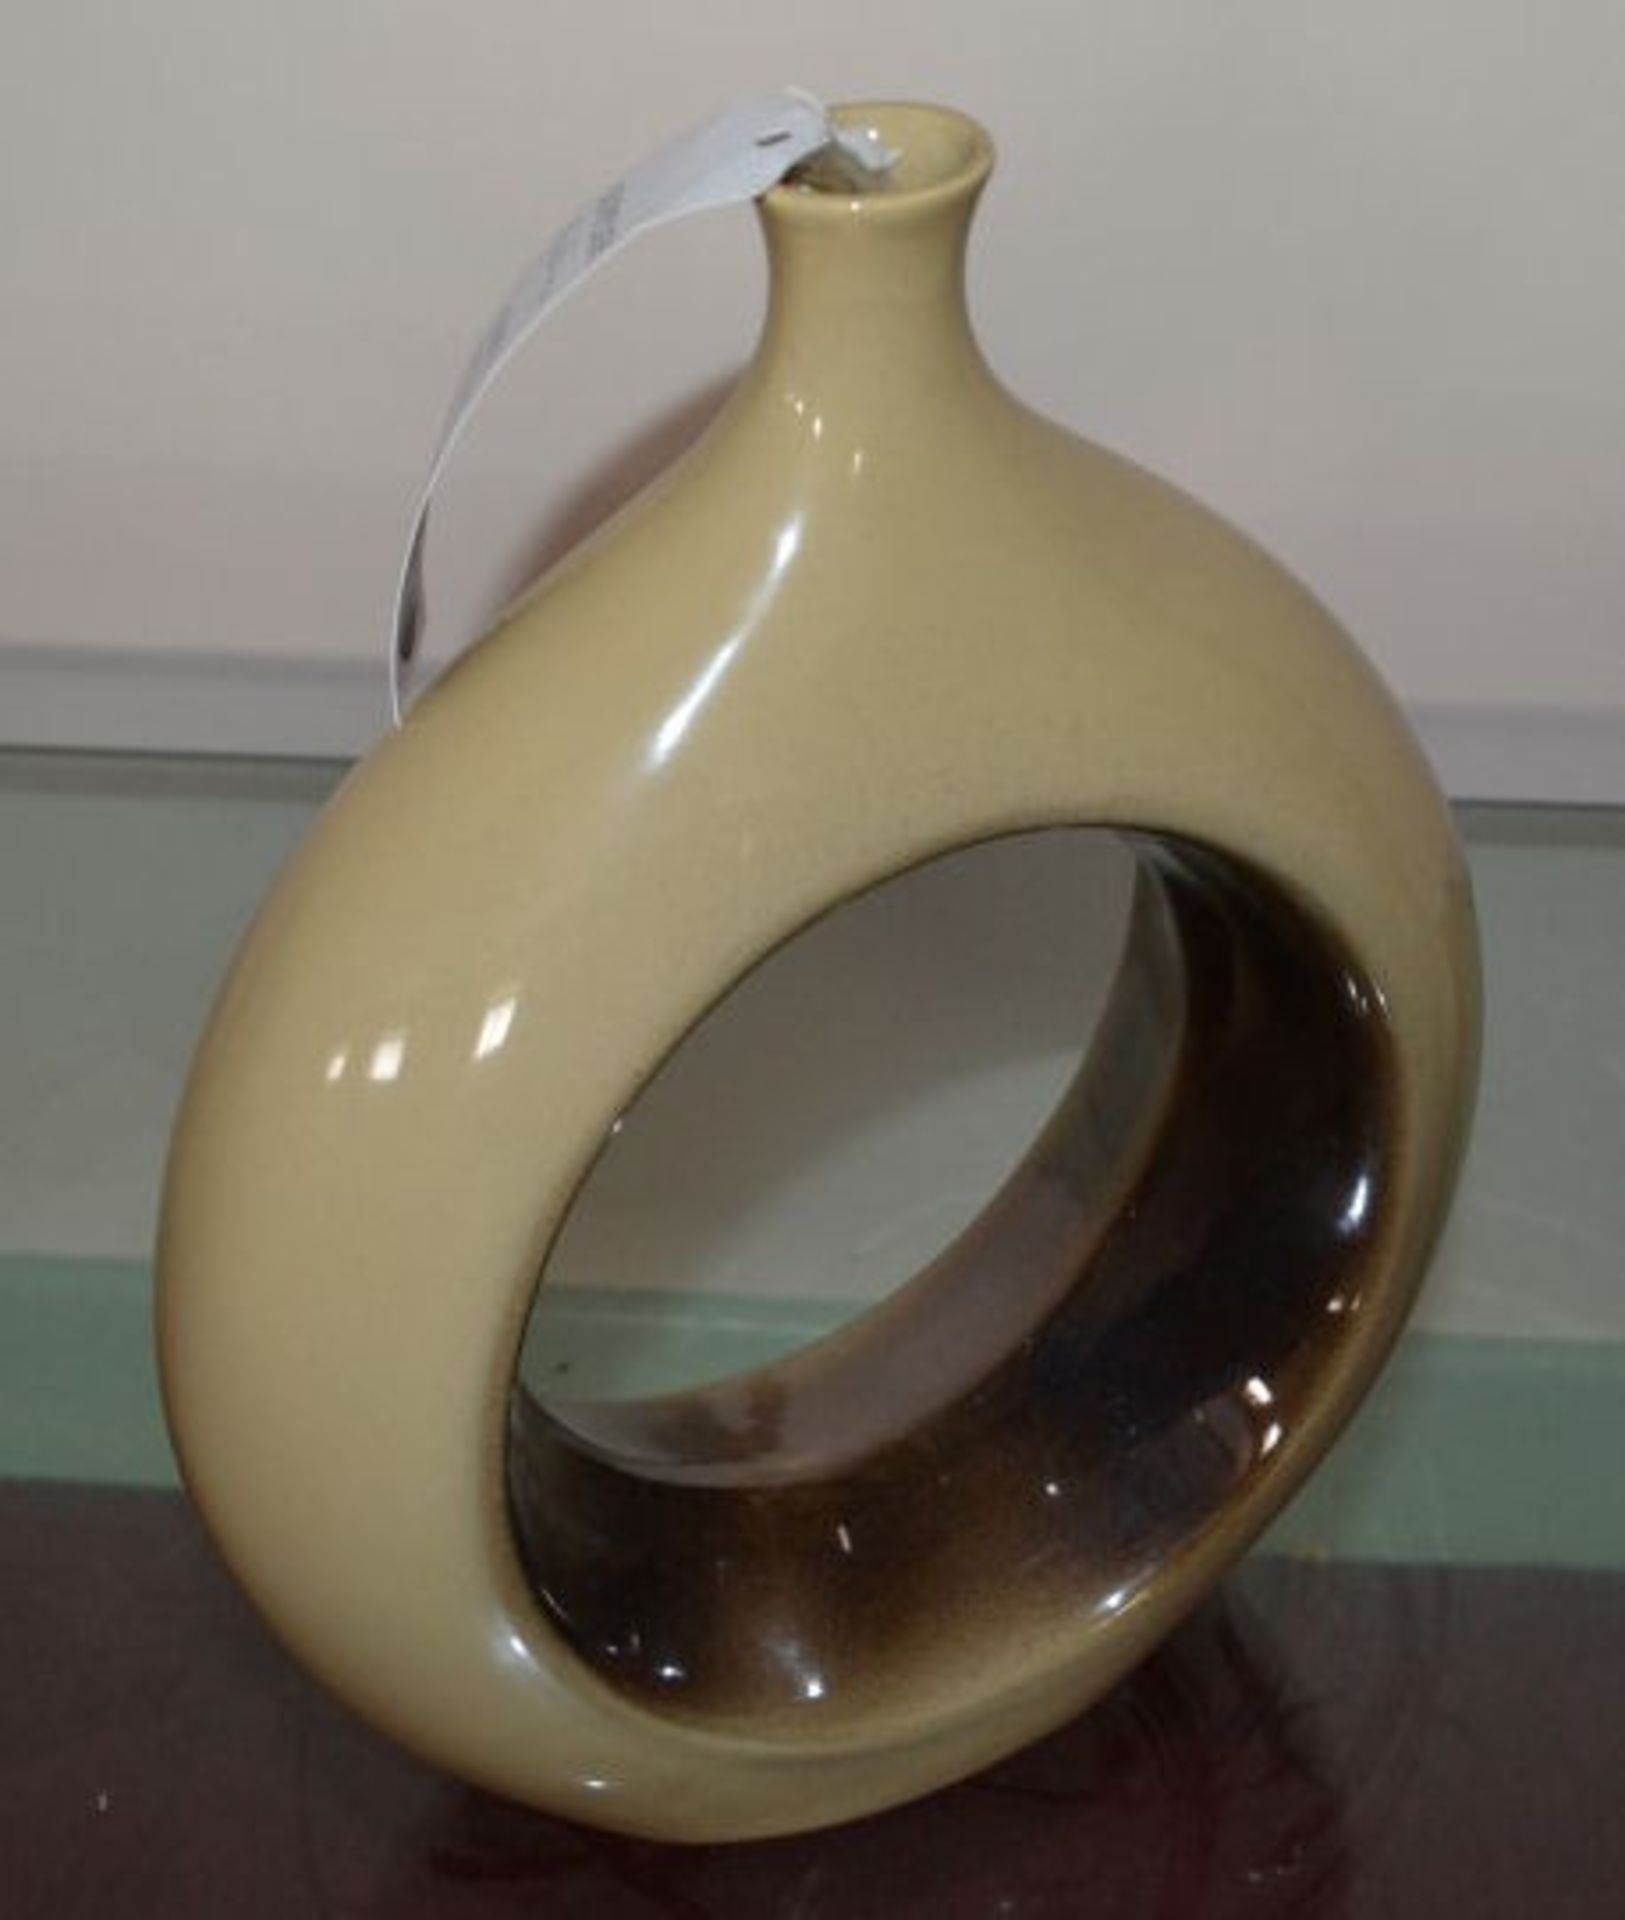 5 Assorted Decorative Vases - See Description For Details - Image 2 of 11